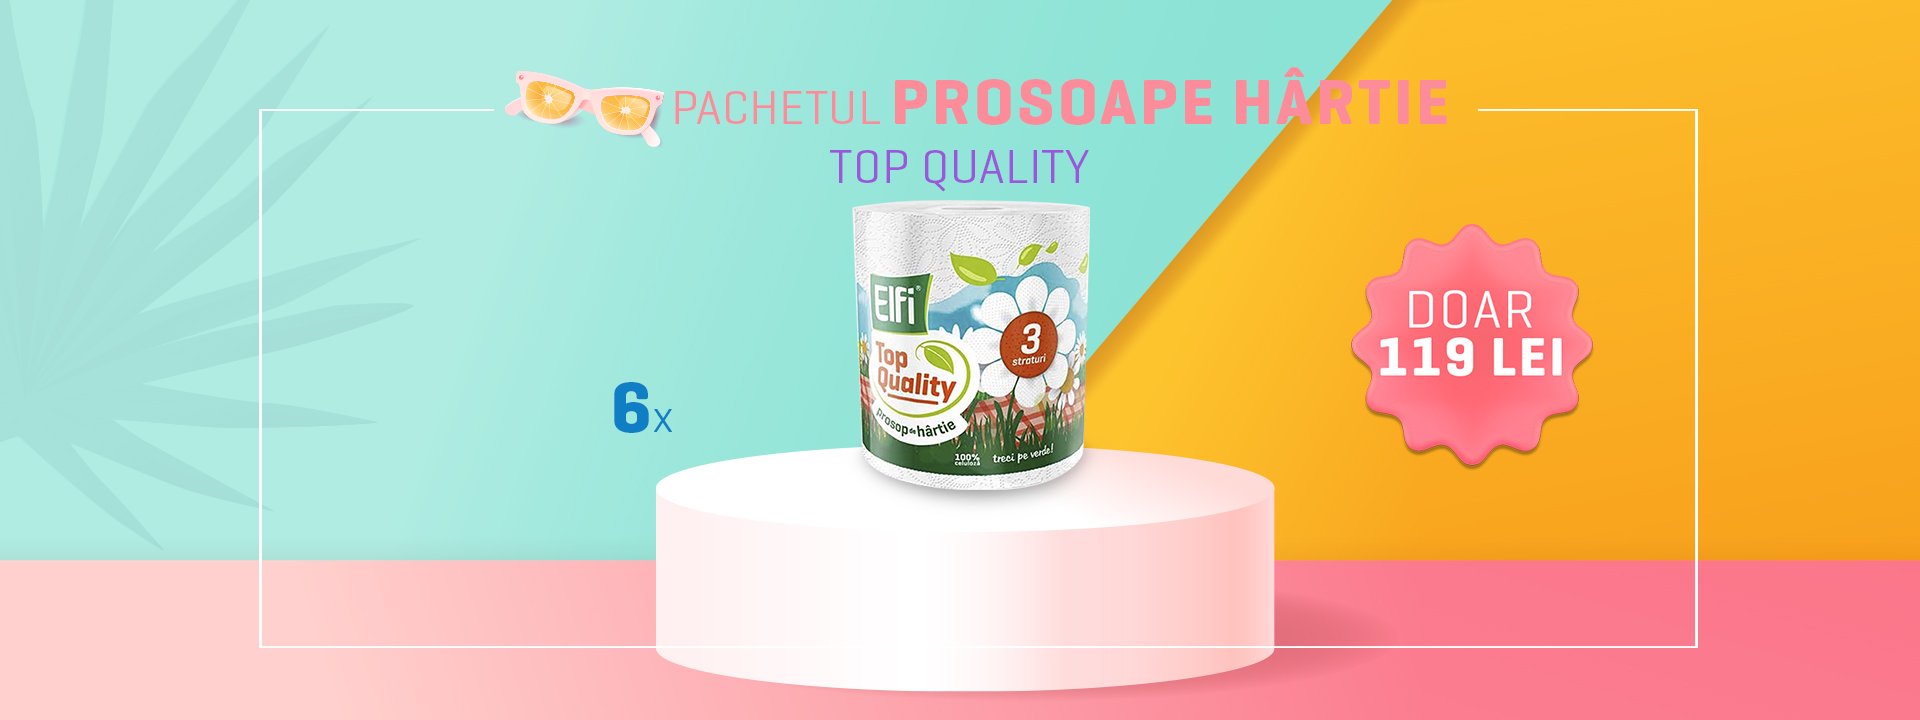 Pachet Prosoape Hartie - Top Quality 1920x720px